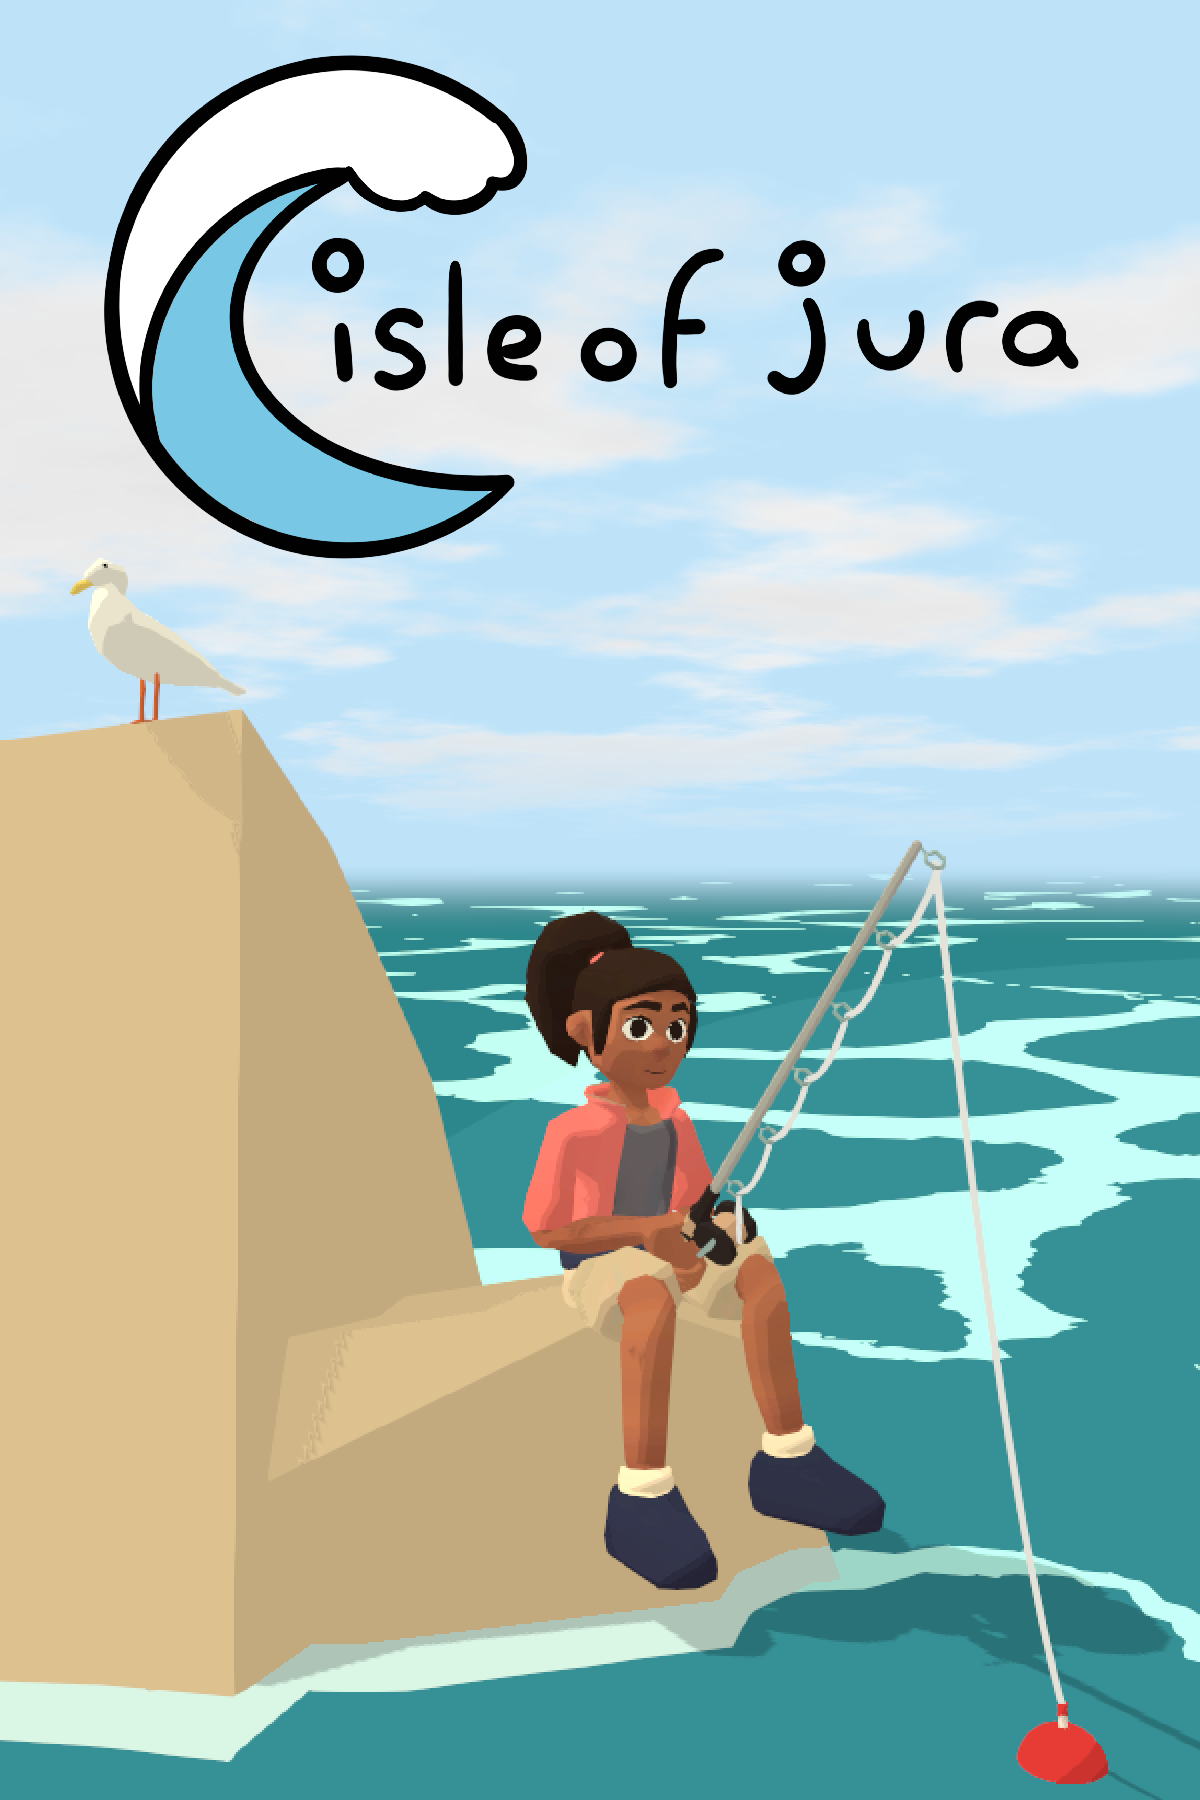 Isle of jura featured image